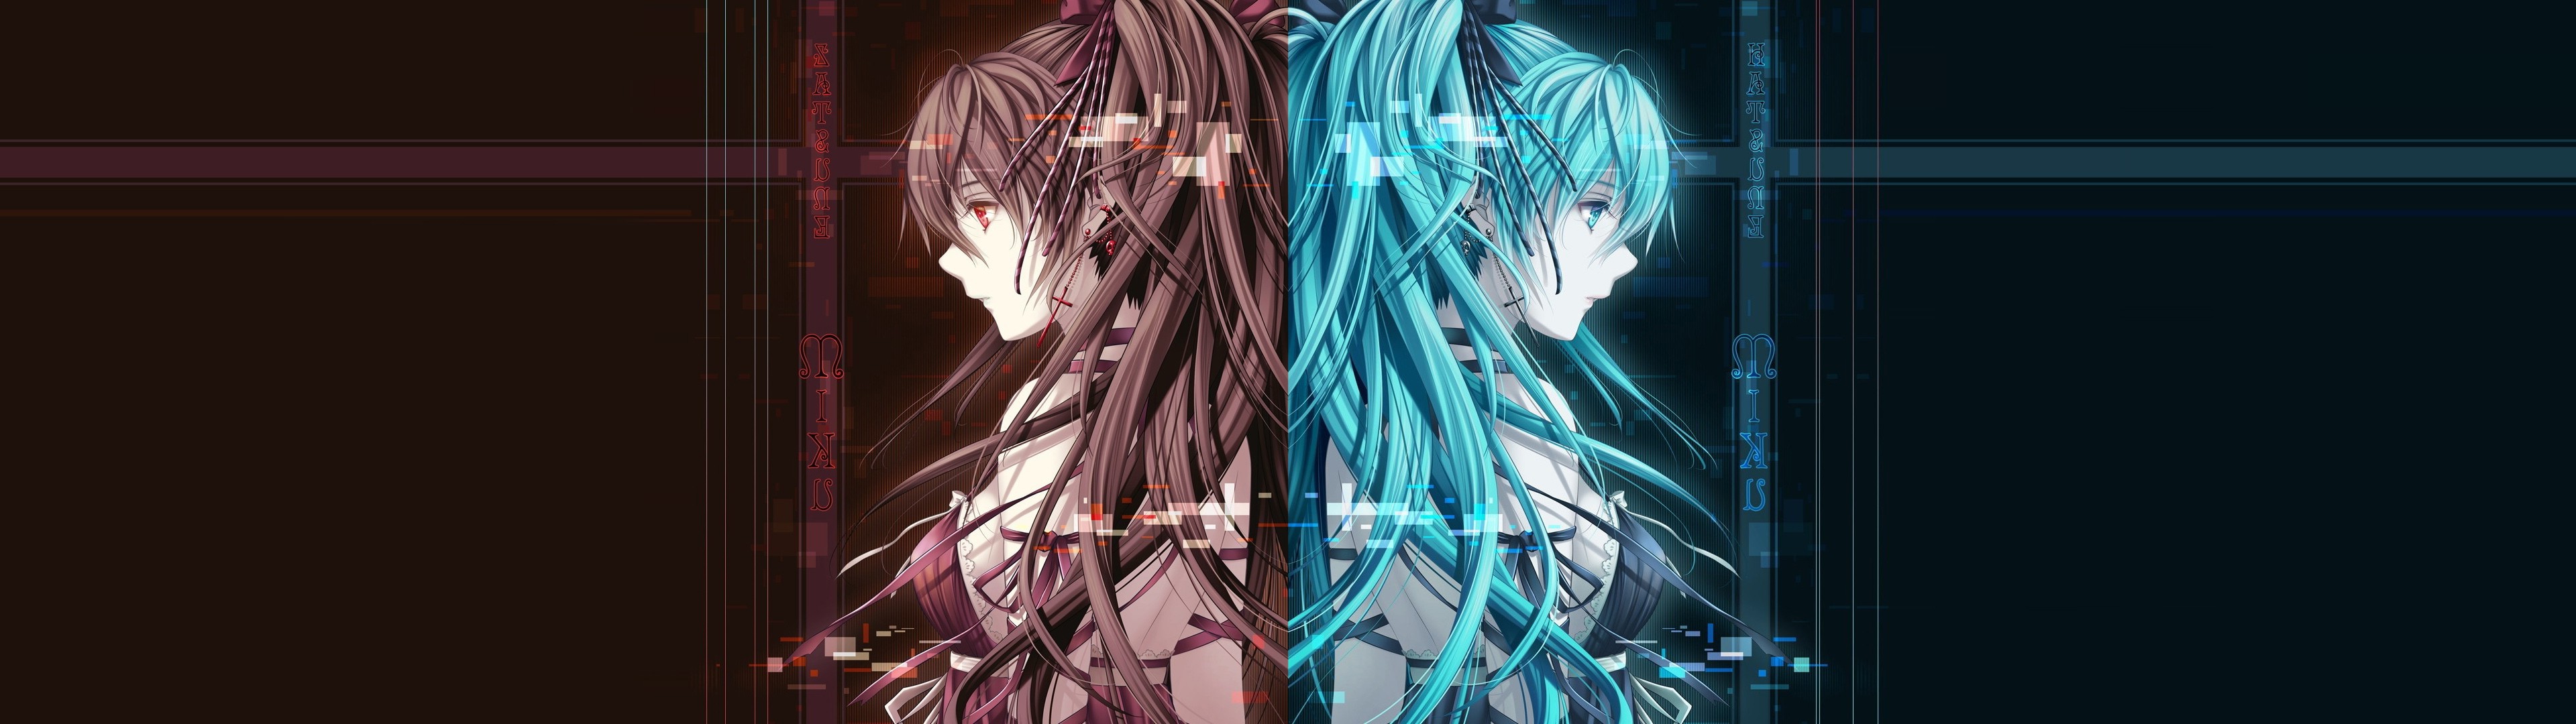 Vocaloid, Hatsune Miku, Anime Wallpaper